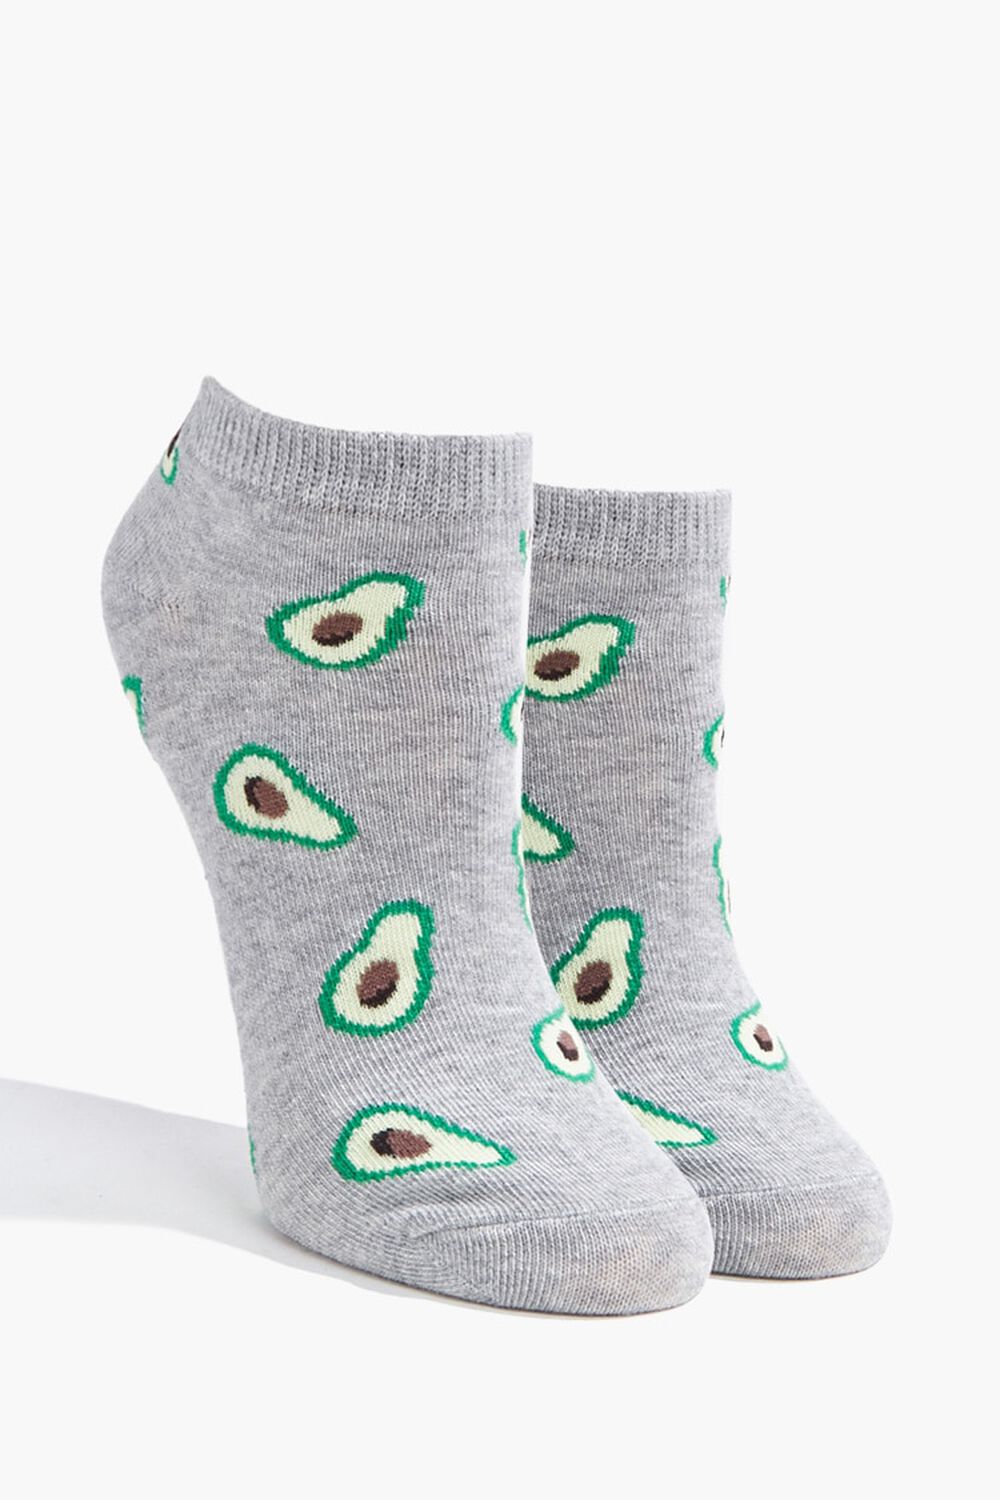 HEATHER GREY/MULTI Avocado Graphic Ankle Socks, image 1